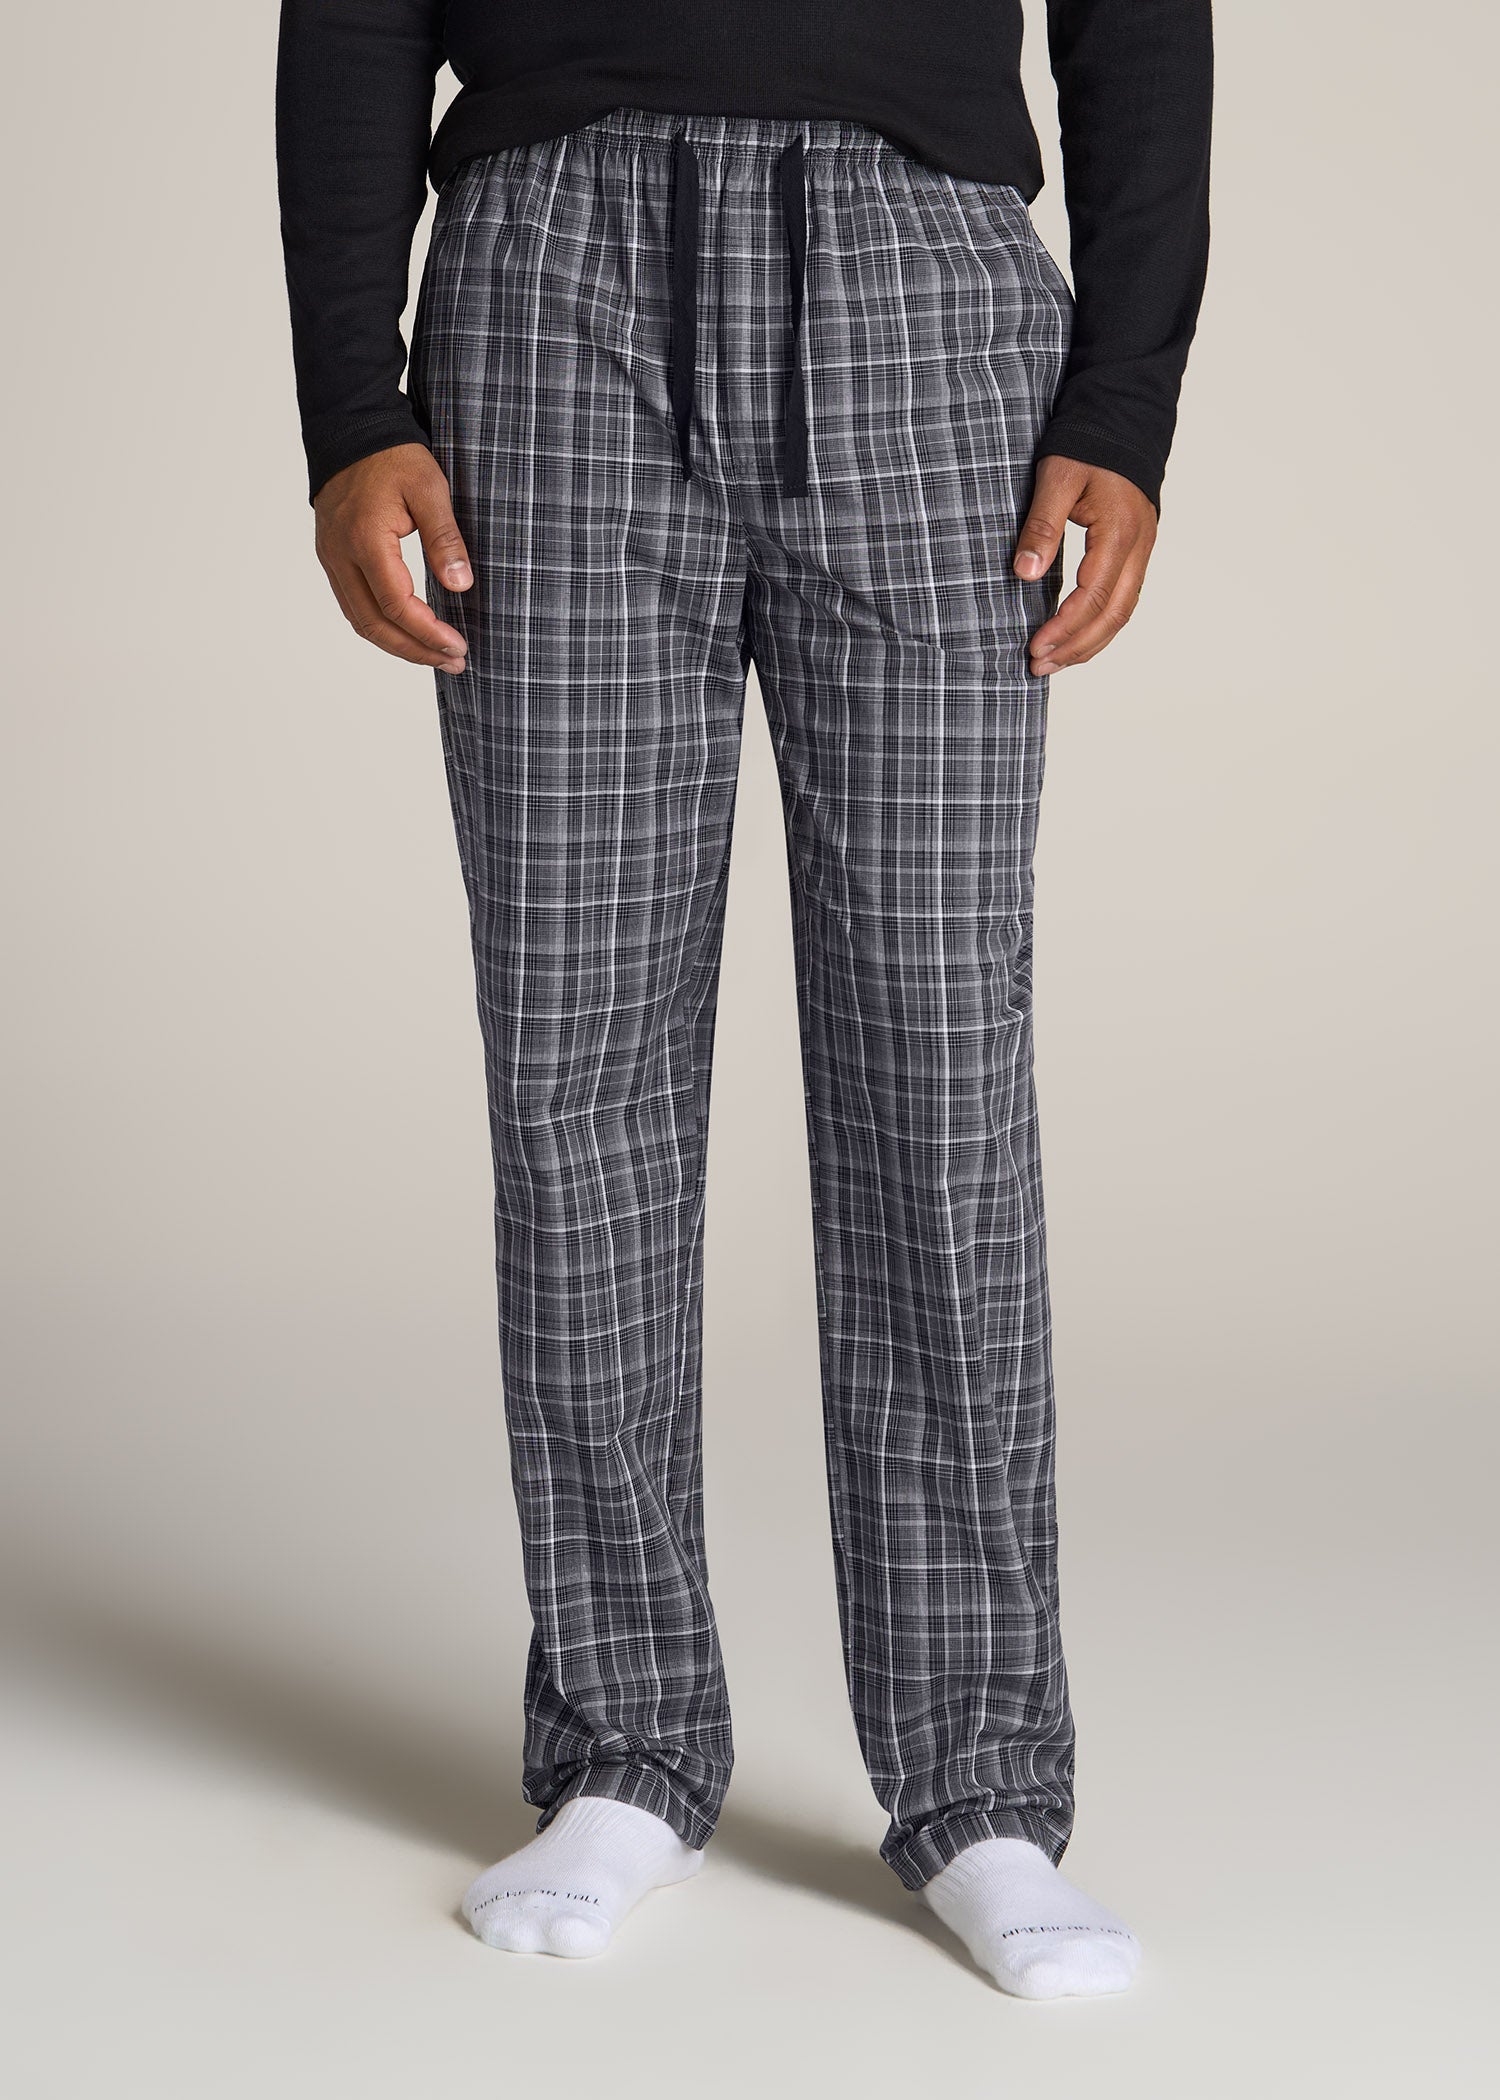 American-Tall-Men-Woven-Pajama-Blue-Black-Grey-Plaid-front